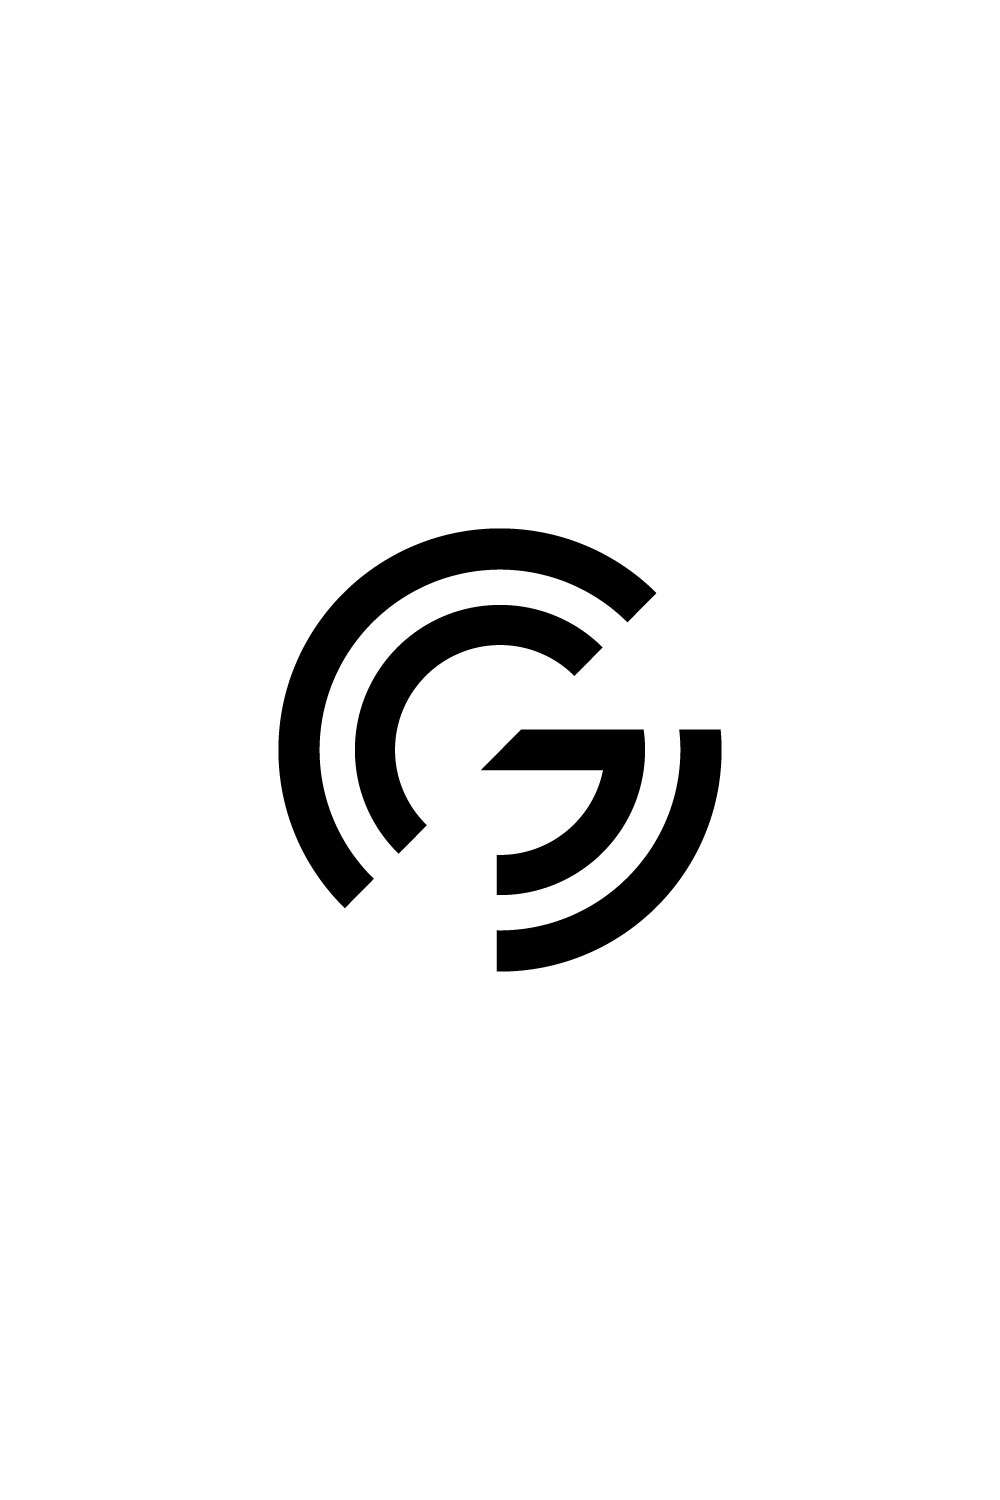 G Logo Design Template Pinterest image.